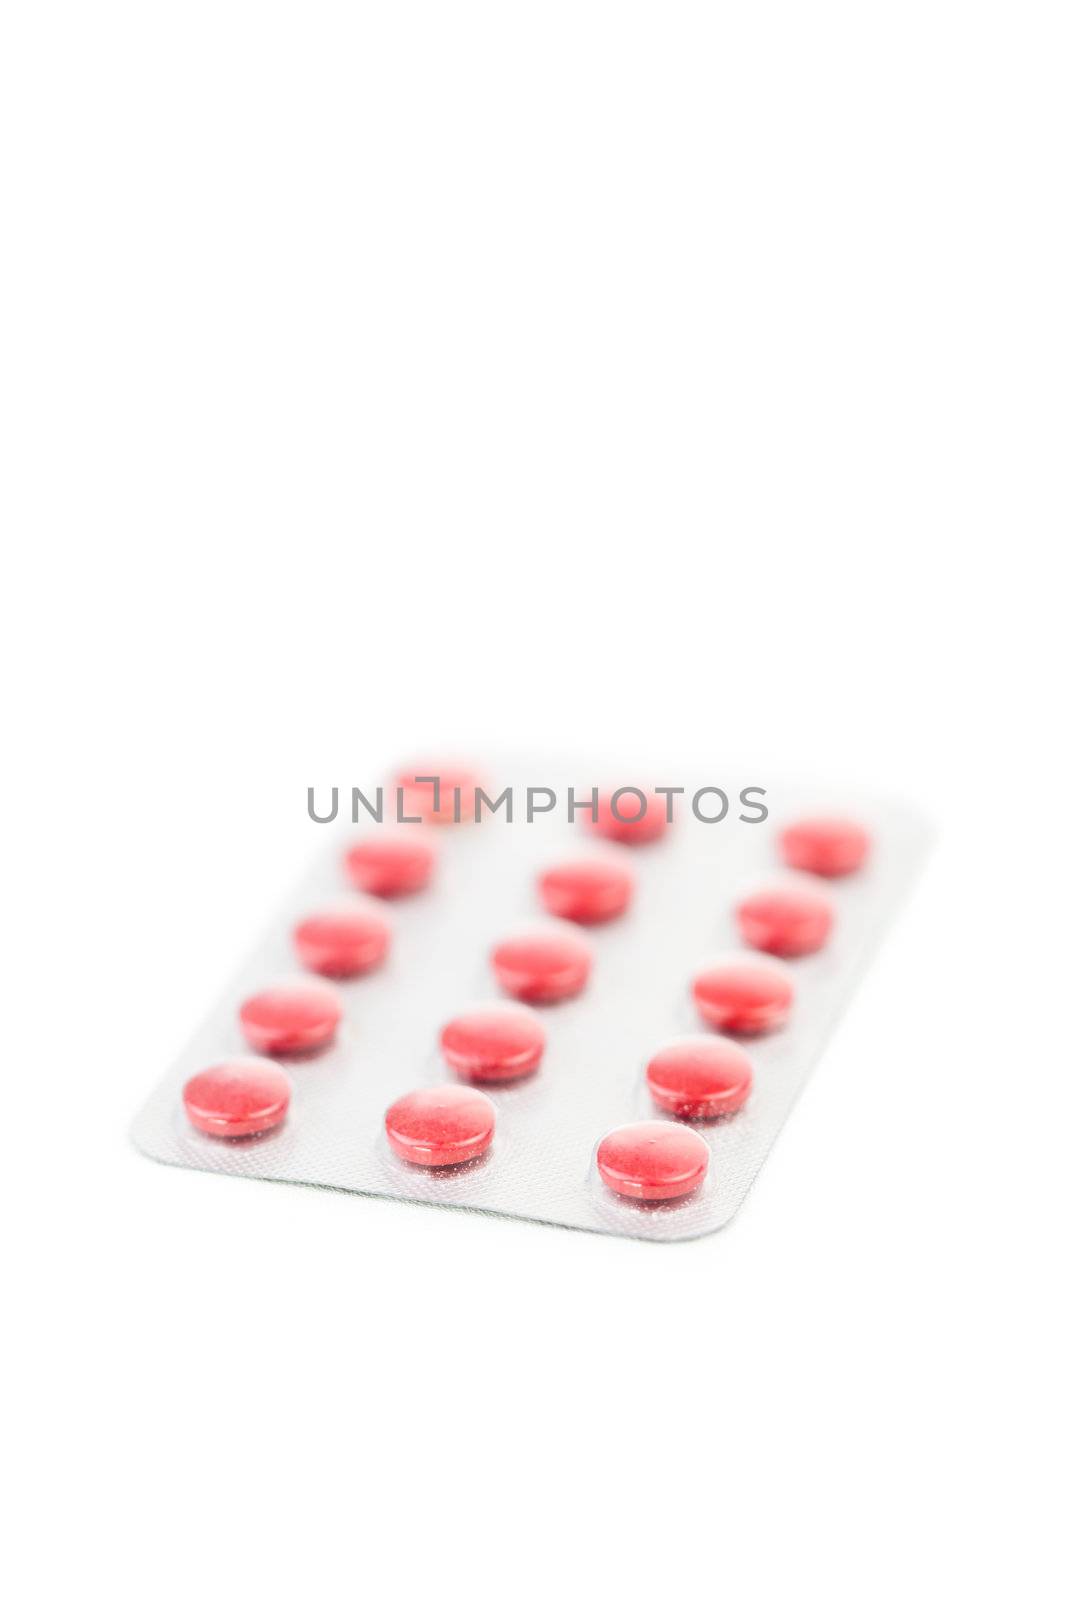 Red pills against white background